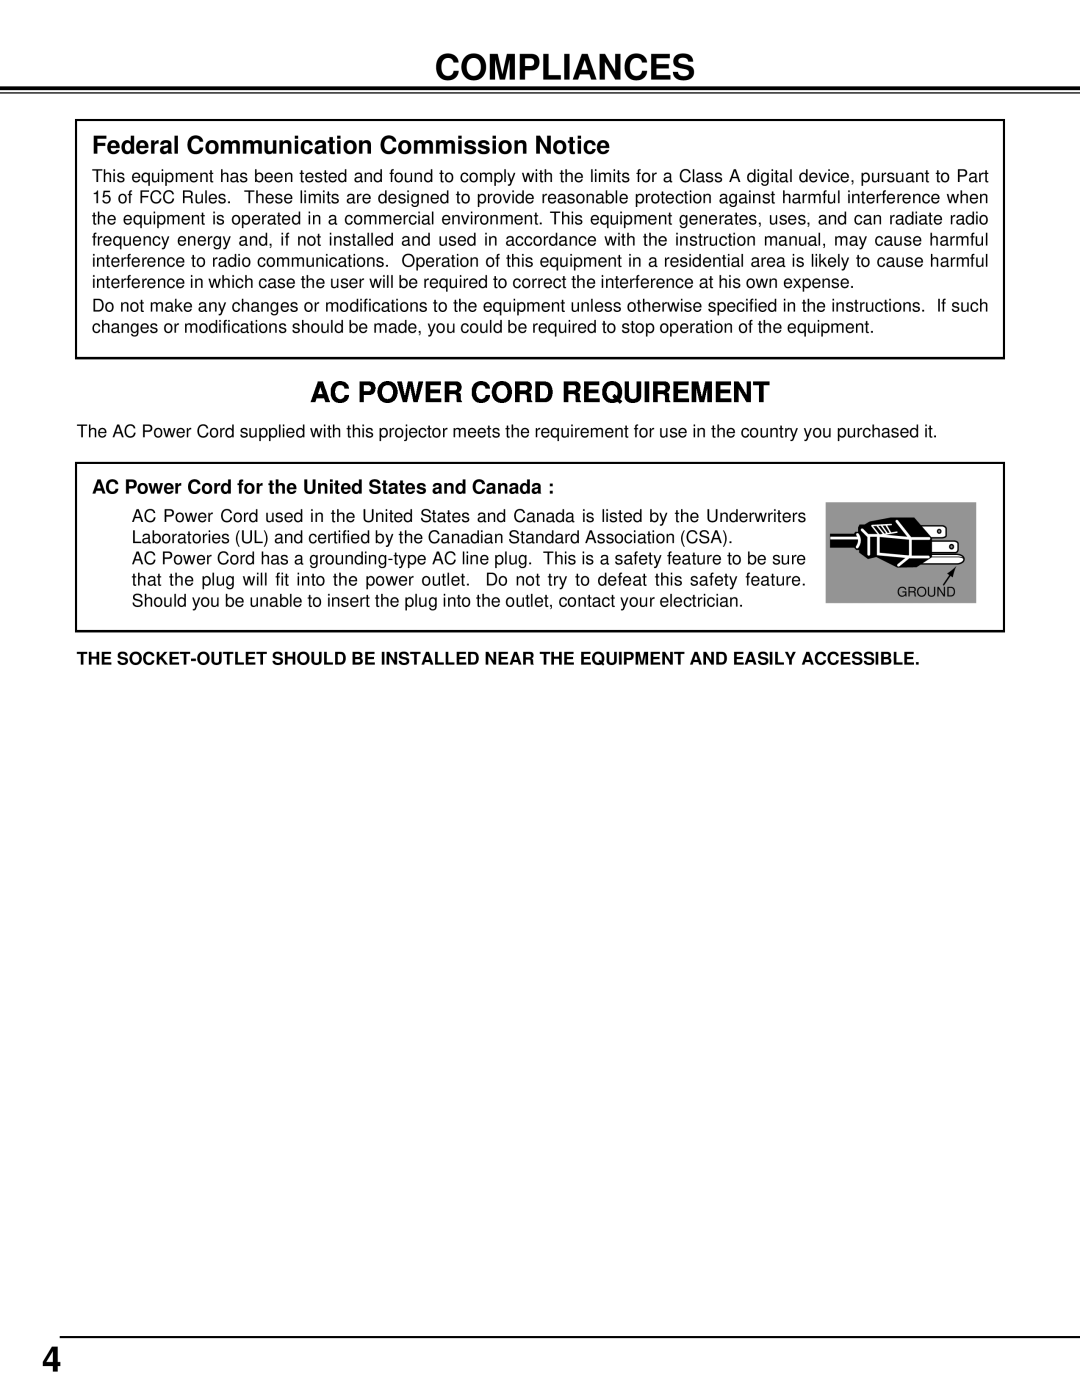 Christie Digital Systems 38-VIV301-01 Compliances, Ac Power Cord Requirement, Federal Communication Commission Notice 